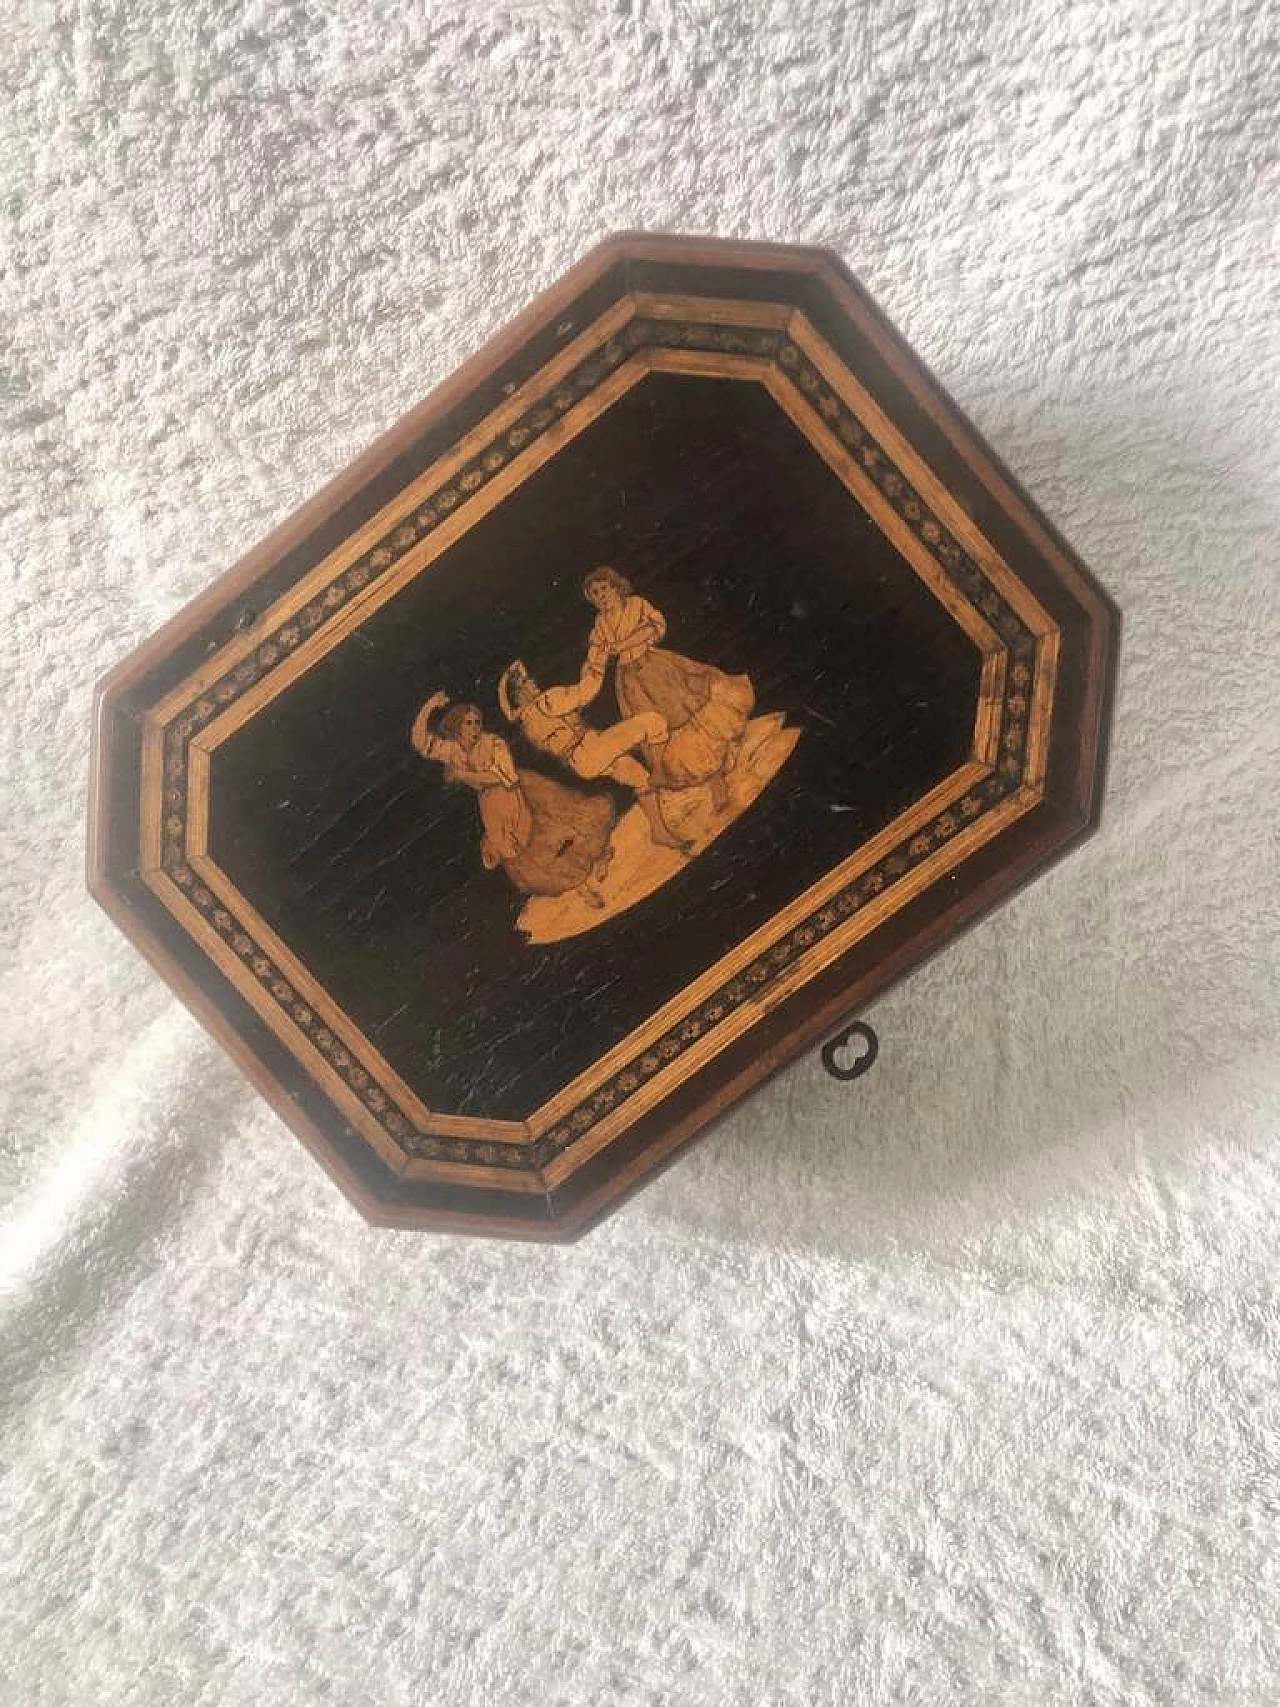 Sorrentine jewelry box in inlaid wood, 19th century 1400599